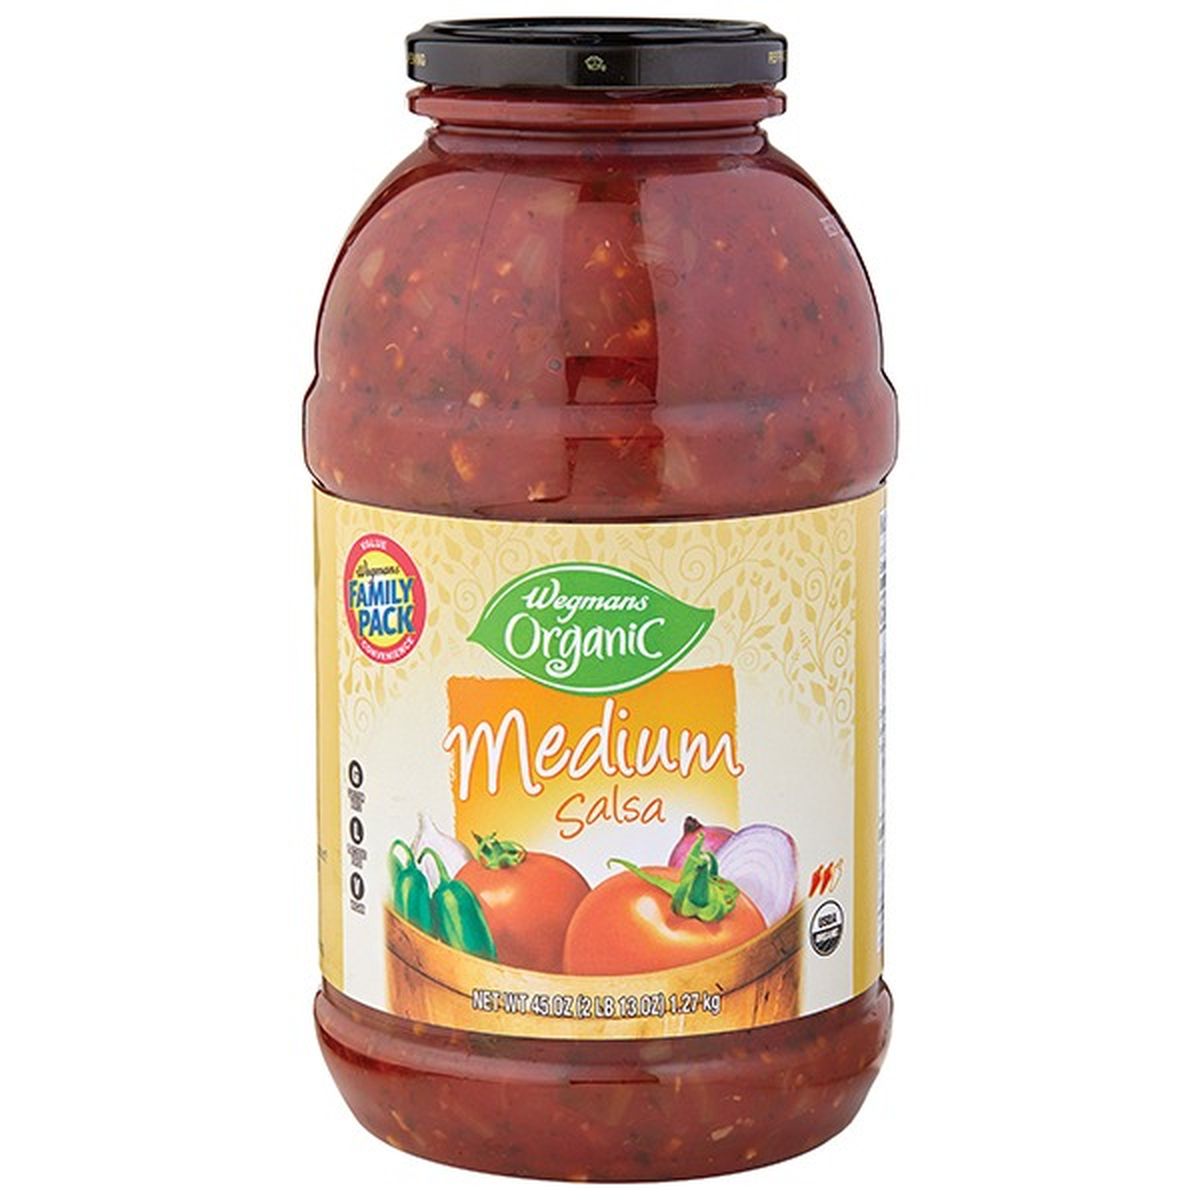 Calories in Wegmans Organic Salsa, Medium, FAMILY PACK